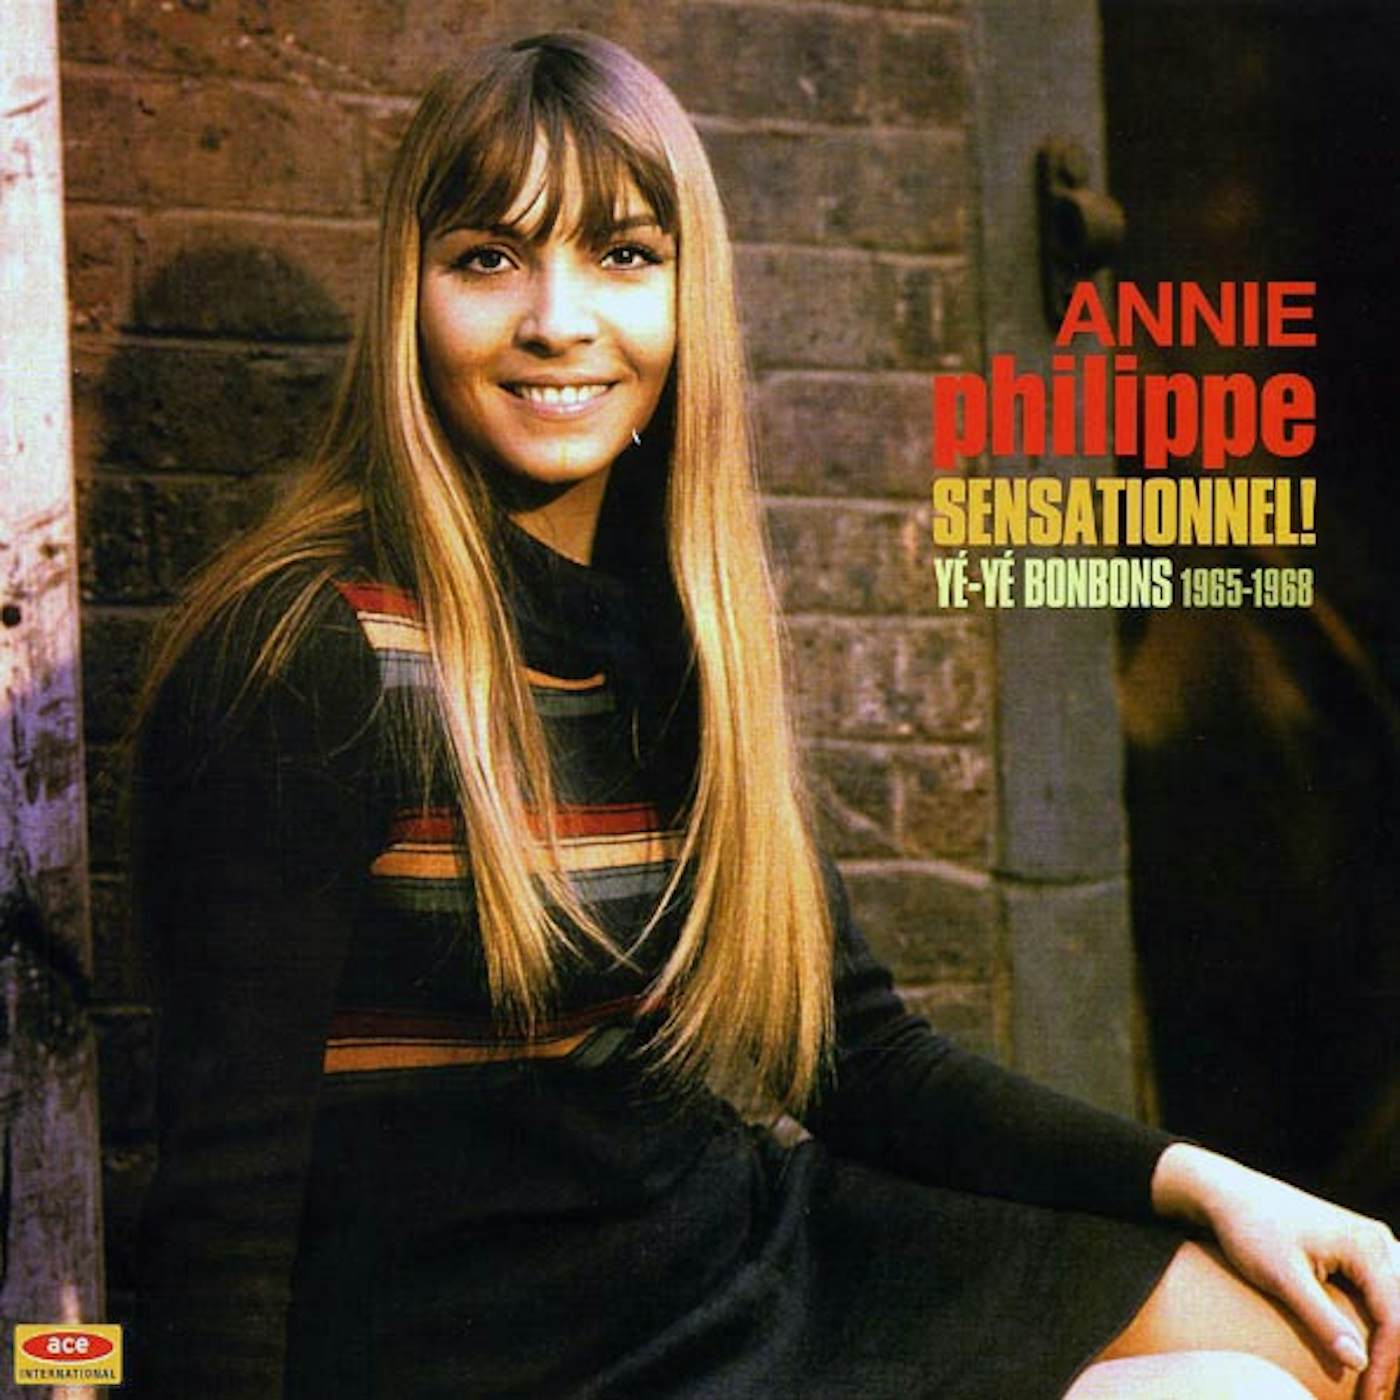 Annie Philippe  LP -  Sensationnel! Ye+Ye Bonbons 19651968 (180g) (colored vinyl)